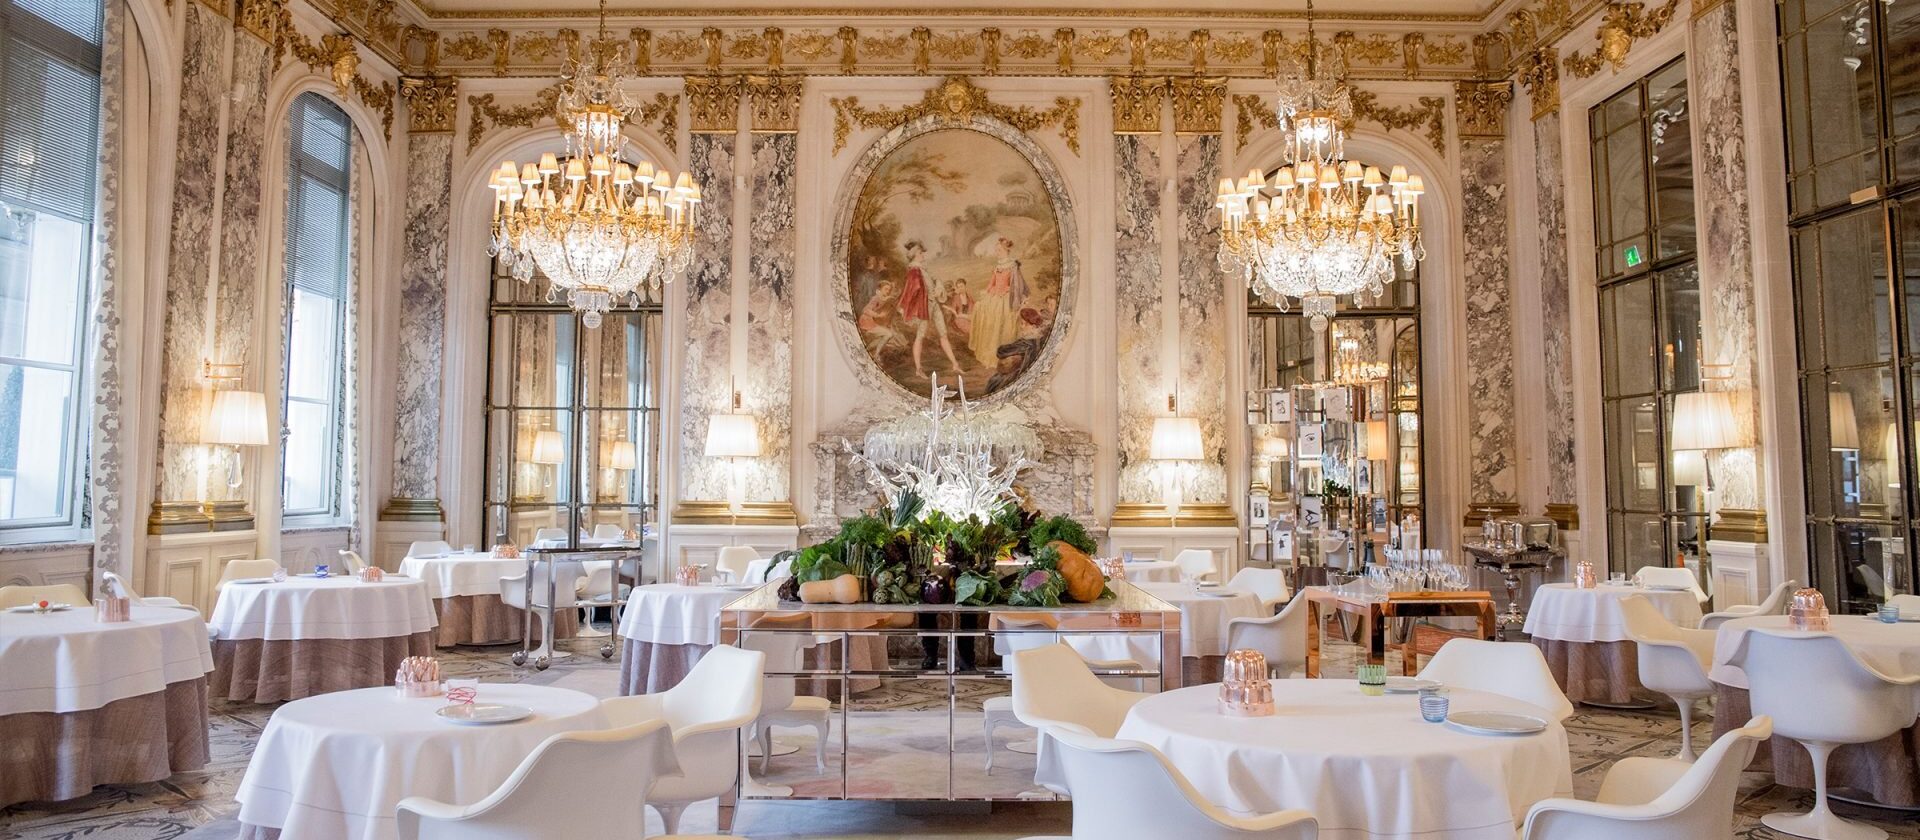 Le Meurice Alain Ducasse巴黎餐厅的餐桌和室内装饰